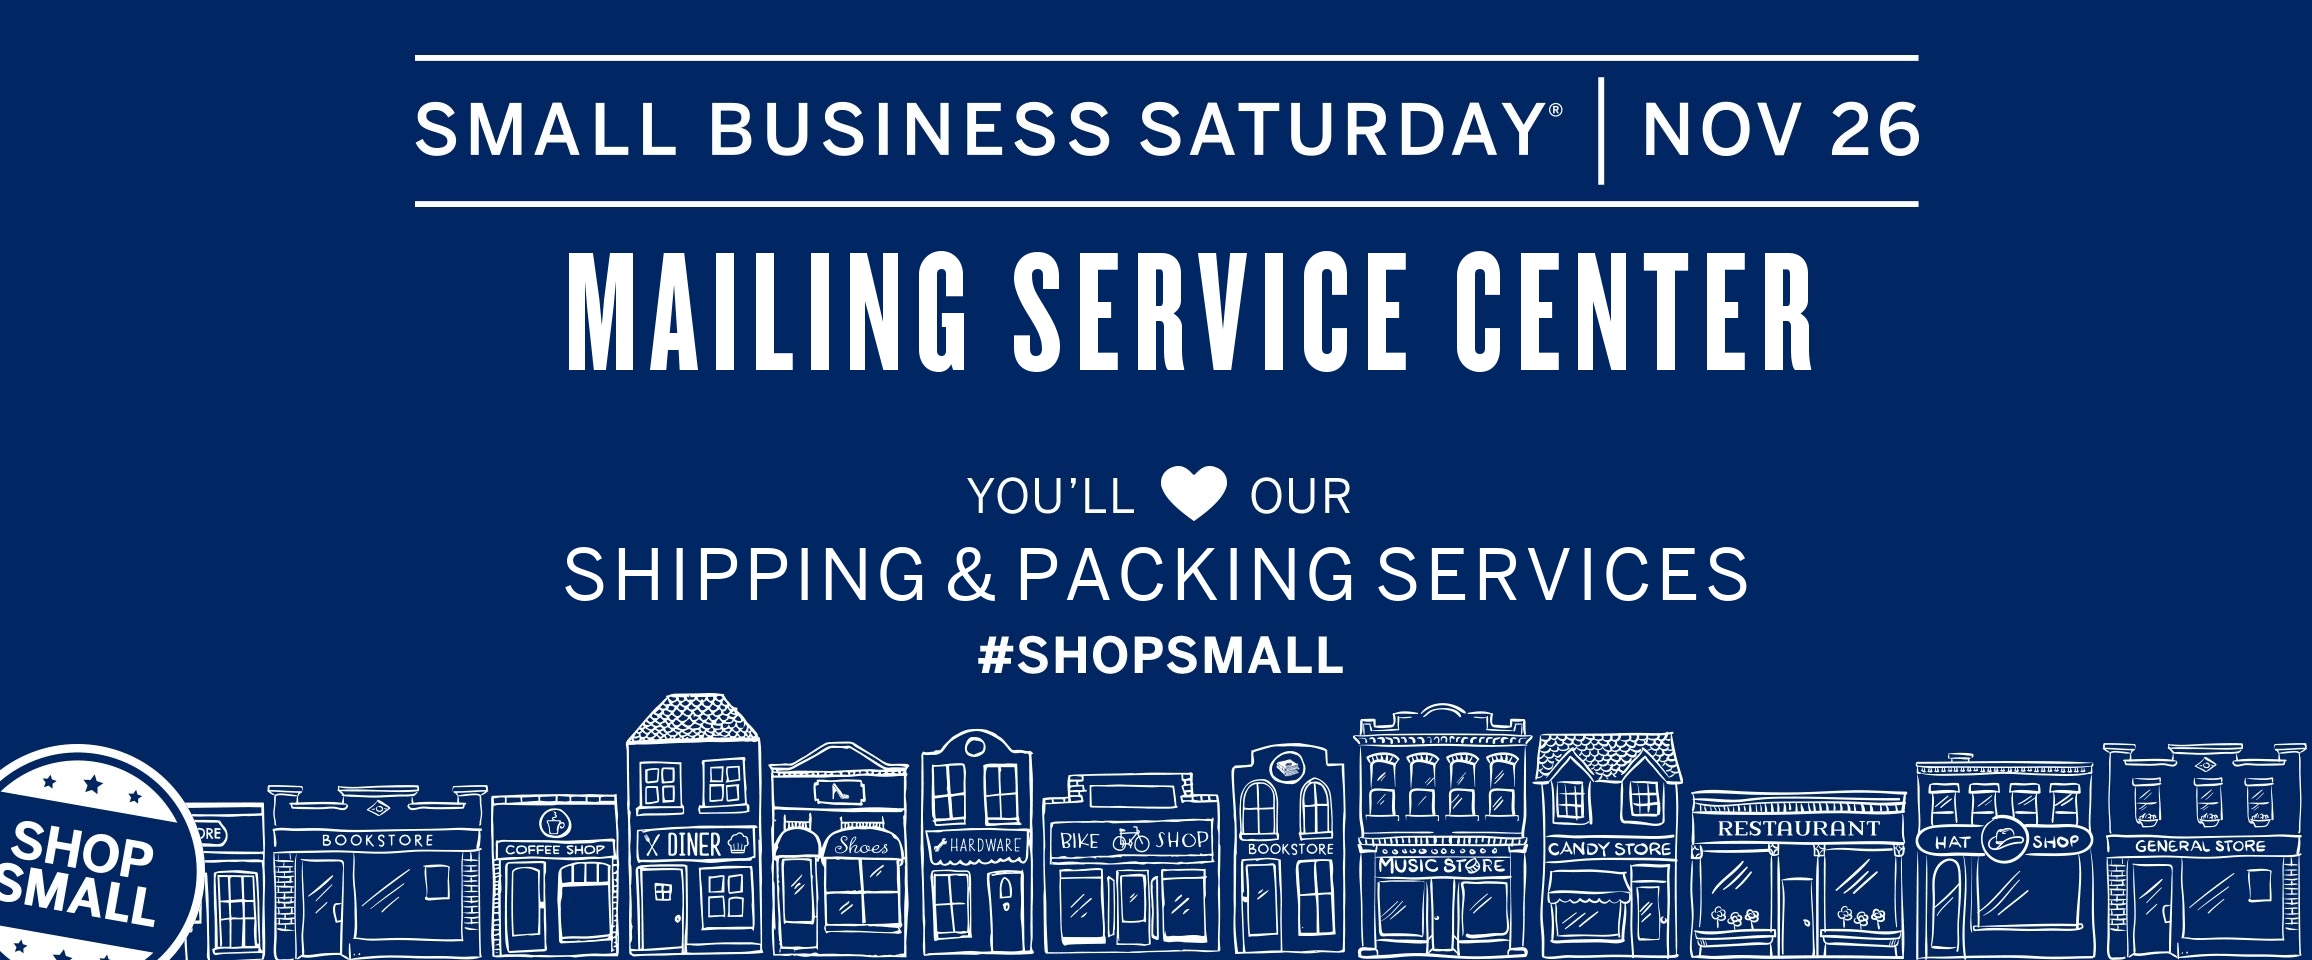 Mailing Service Center Celebrates Small Business Saturday 11/26/16